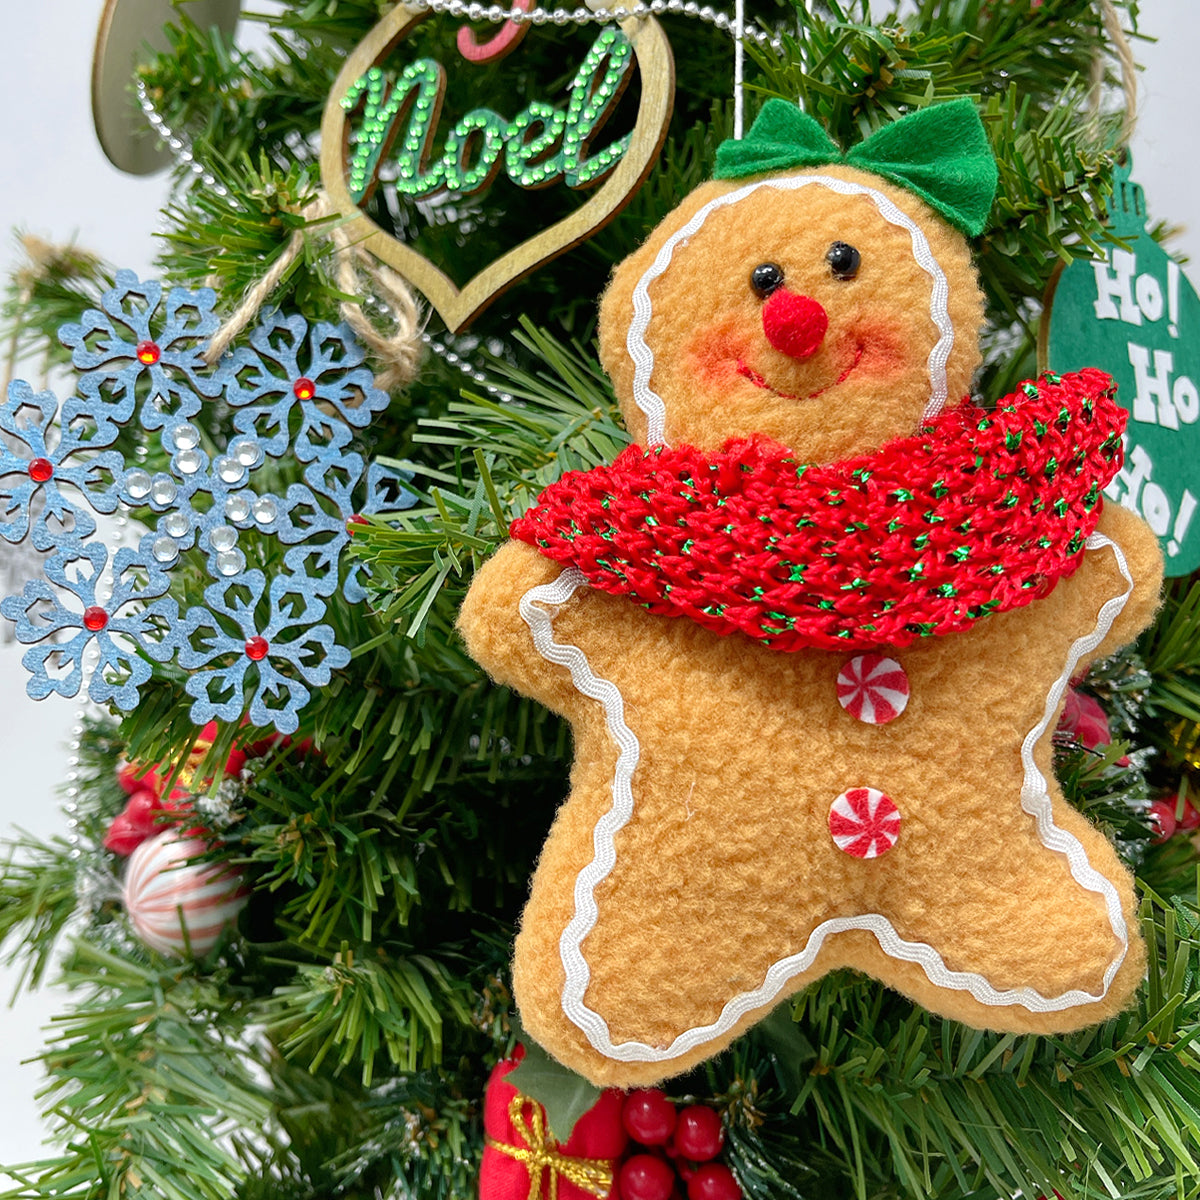 Wrapables Plush Gingerbread Man & Woman Christmas Tree Ornaments (Set of 2)